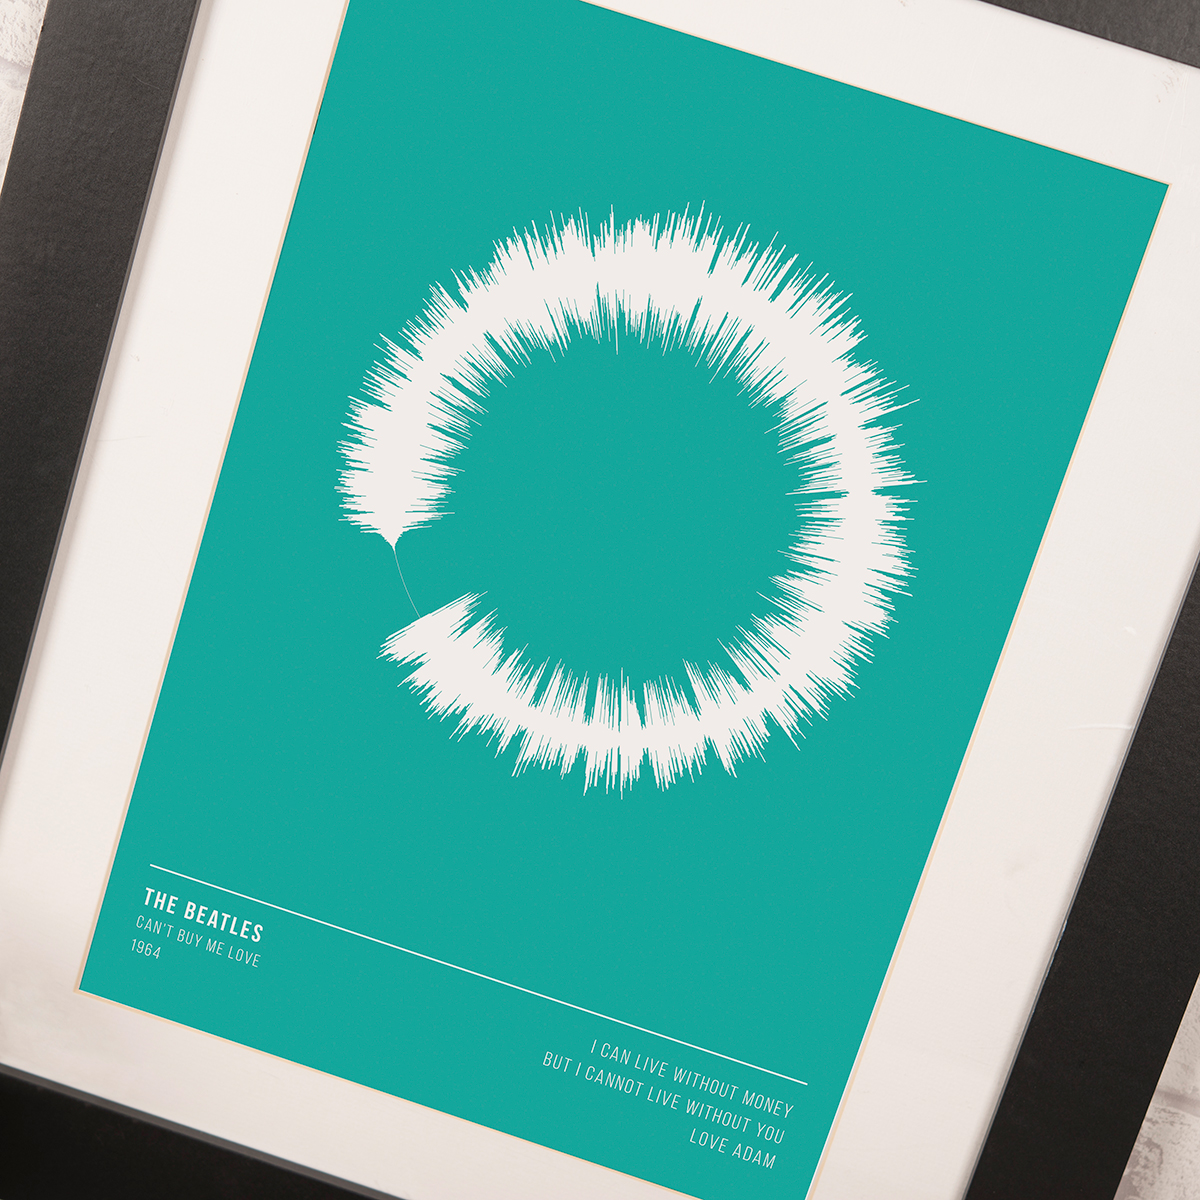 Personalised Framed Print - Circular Soundwave